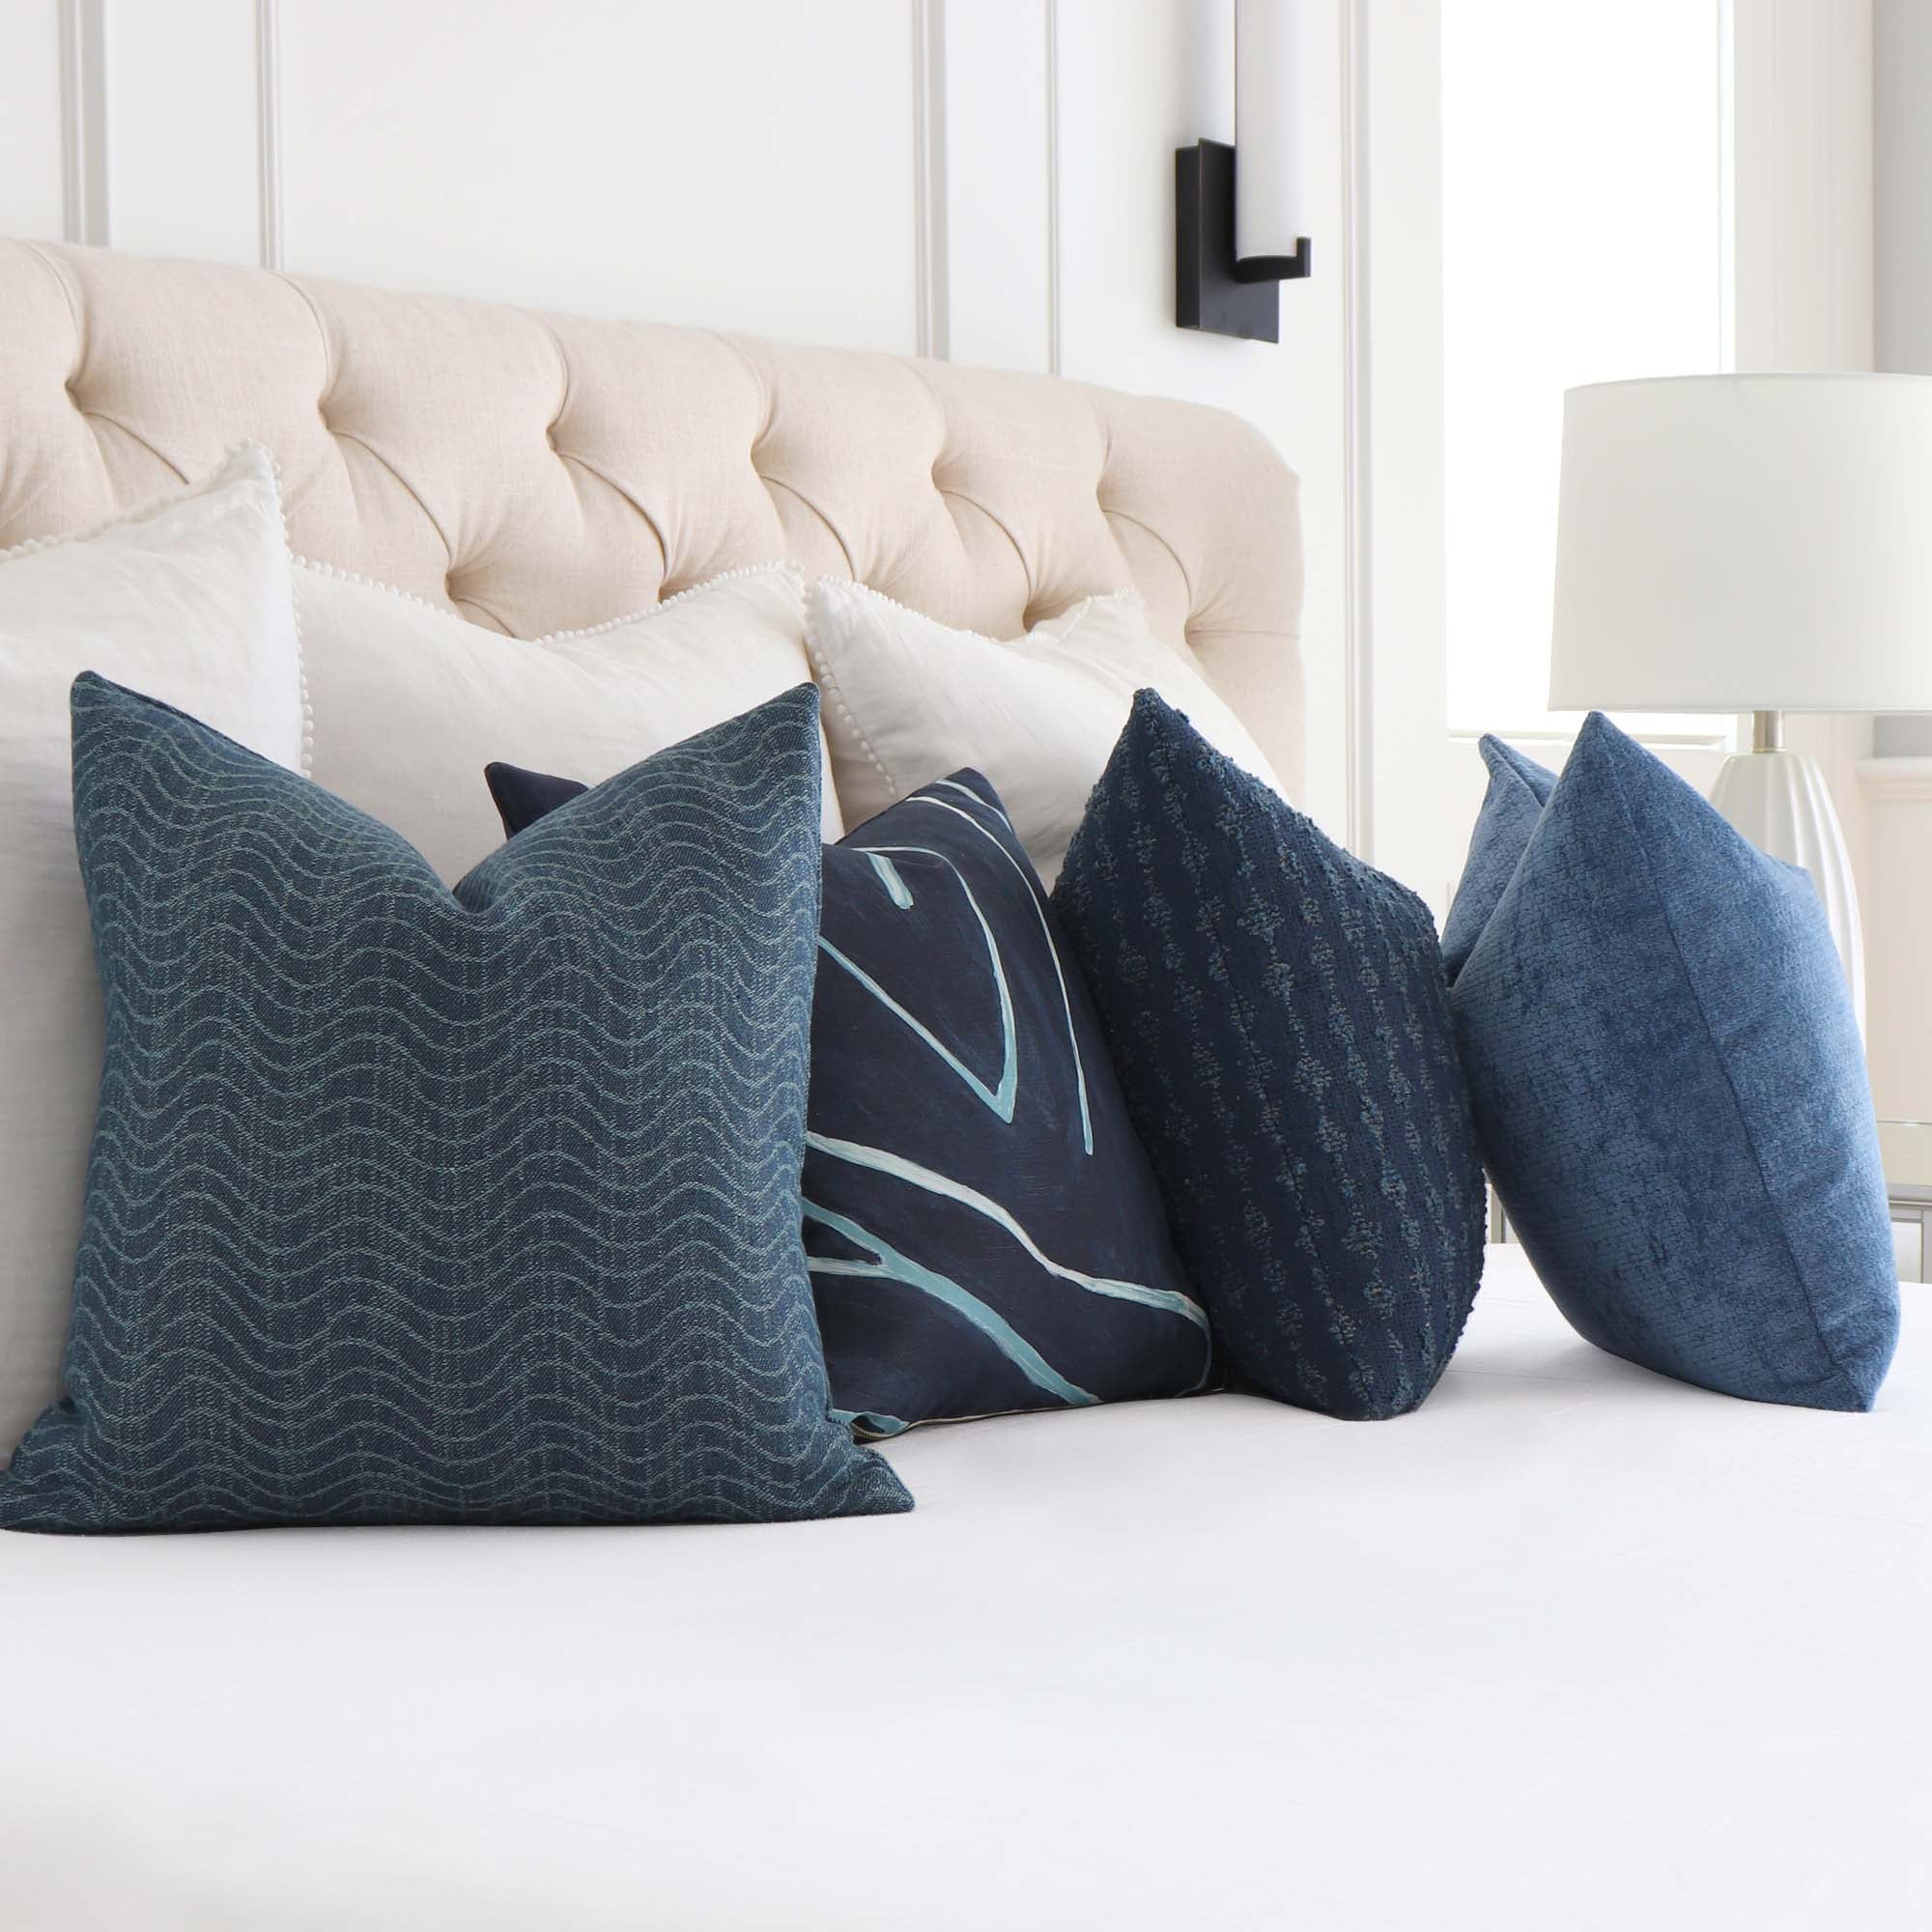 Kelly Wearstler LeeJofa Dadami Marlin Cobalt Denim Blue Woven Linen Striped Designer Throw Pillow Cover with Complementing Pillows